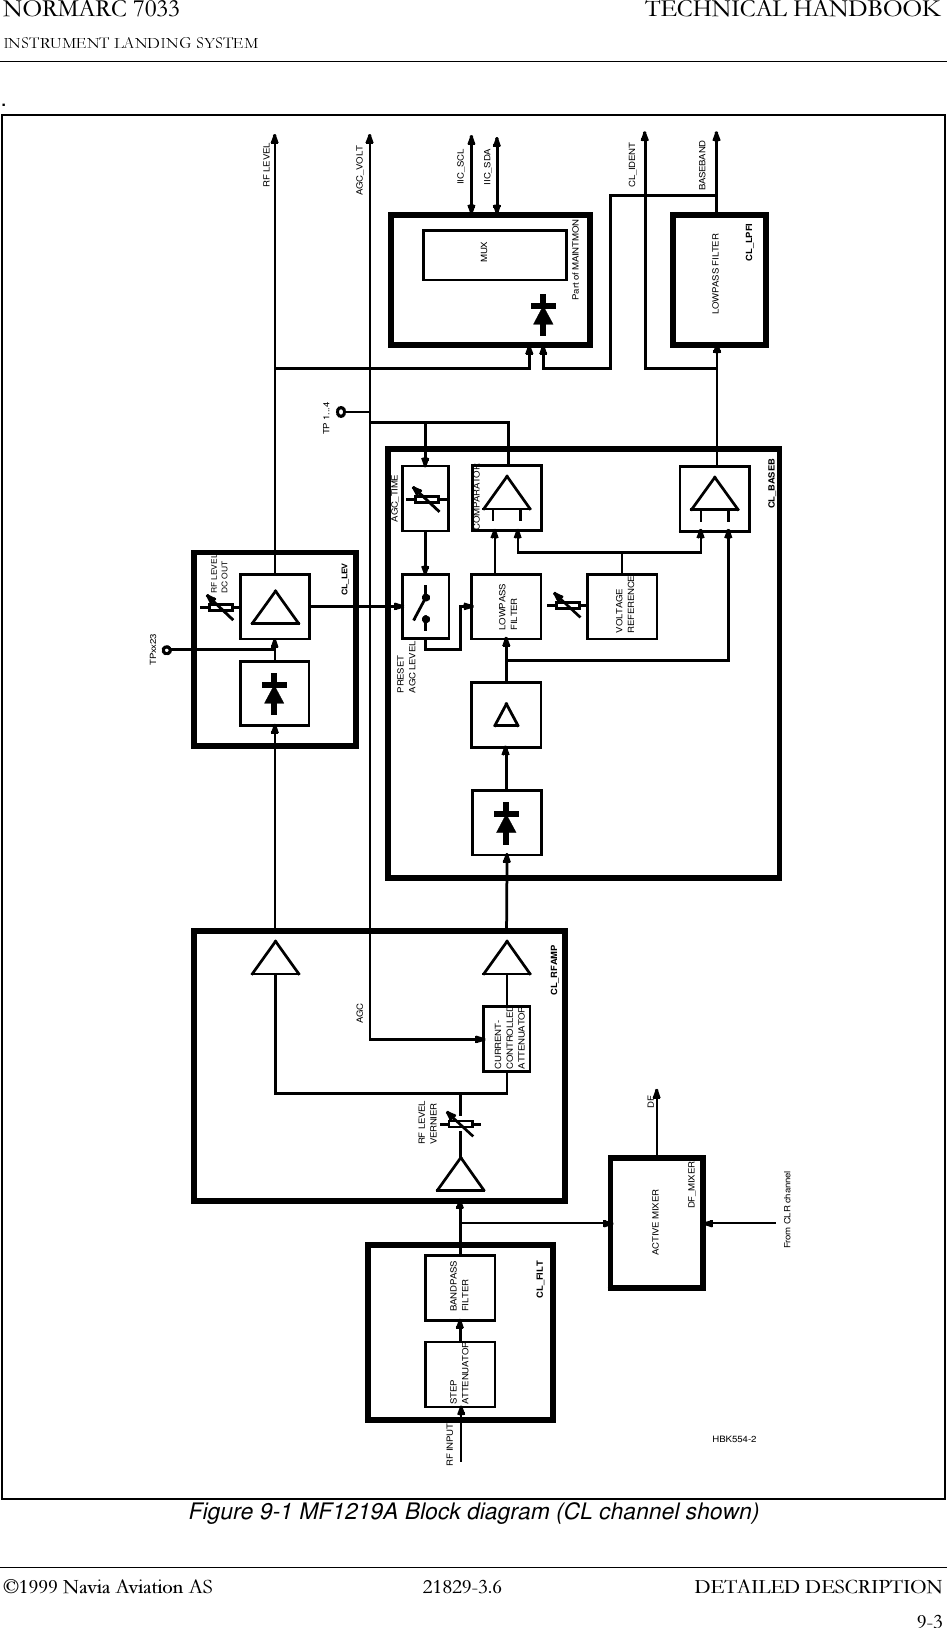 &apos;(7$,/(&apos;&apos;(6&amp;5,37,211250$5&amp;7(&amp;+1,&amp;$/+$1&apos;%22.1DYLD$YLDWLRQ$6.Figure 9-1 MF1219A Block diagram (CL channel shown)CL_BASEBCURRENT-CONTROLLEDATTENUATORCL_RFAMPRF LEVELVERNIERSTEPATTENUATORBANDPASSFILTERCL_FILTLOWPASS FILTERBASEBANDRF INPUTCL_LPFIDF_MIXERACTIVE MIXERFrom CLR channelDFLOWPASSFILTERPRESETAGC LEVELRF LEVELDC OUTCL_LEVRF LEVELAGCMUXPart of MAINTMONCL_IDENTIIC_SDAIIC_SCLVOLTAGEREFERENCECOMPARATORAGC_VOLTTP 1...4TPxx23AGC_TIMEHBK554-2